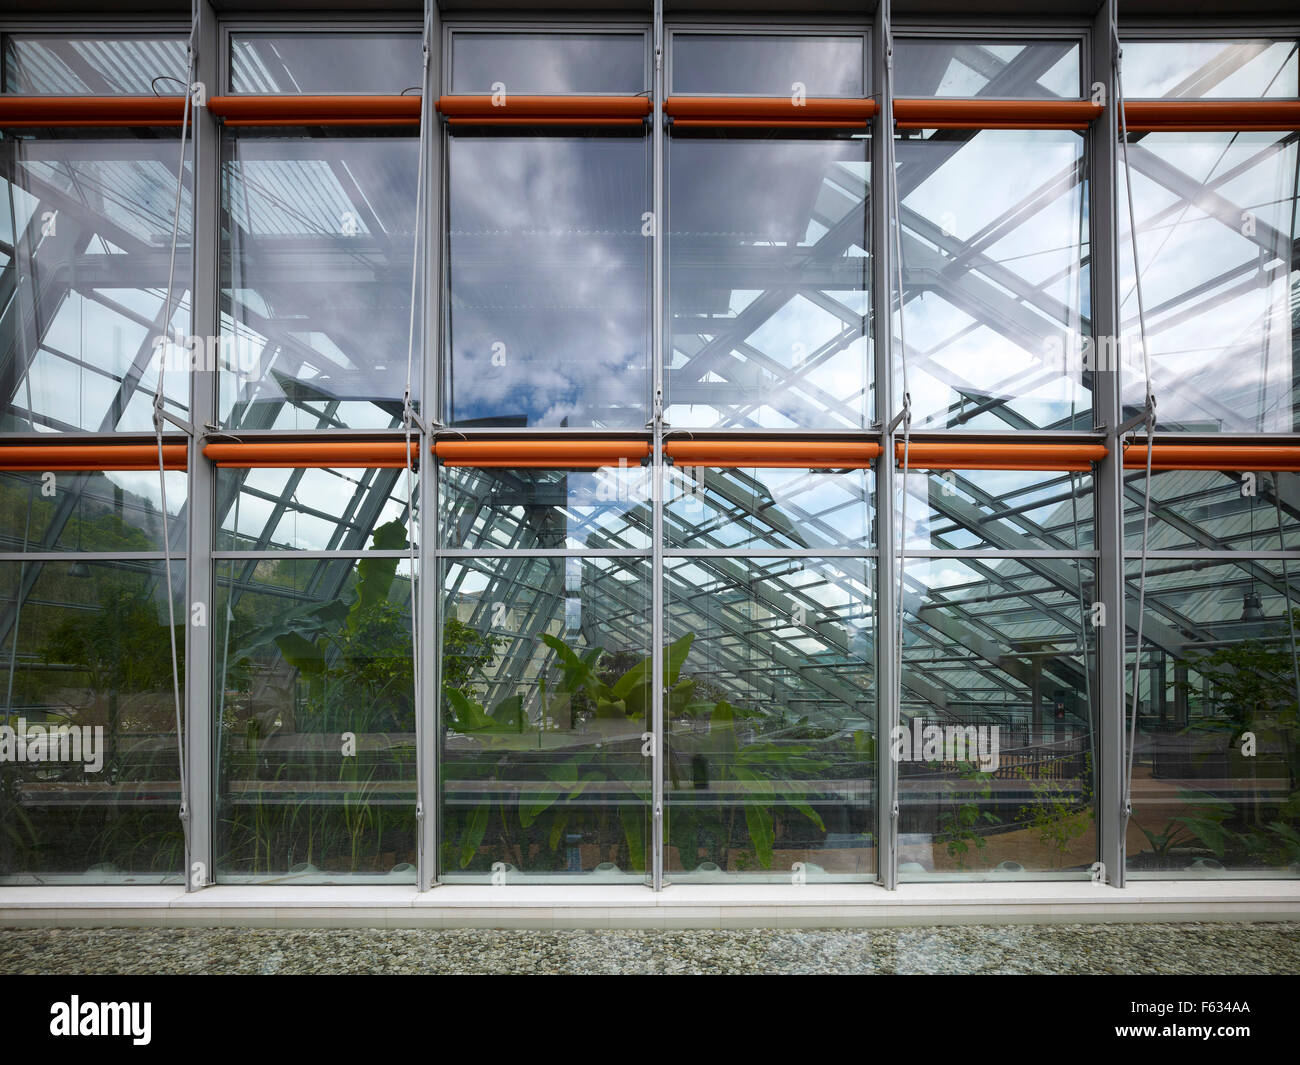 Panel de vidrio del invernadero. Musa Museo de la ciencia, Trentino, Italia. Arquitecto: Renzo Piano Building Workshop, 2013. Foto de stock